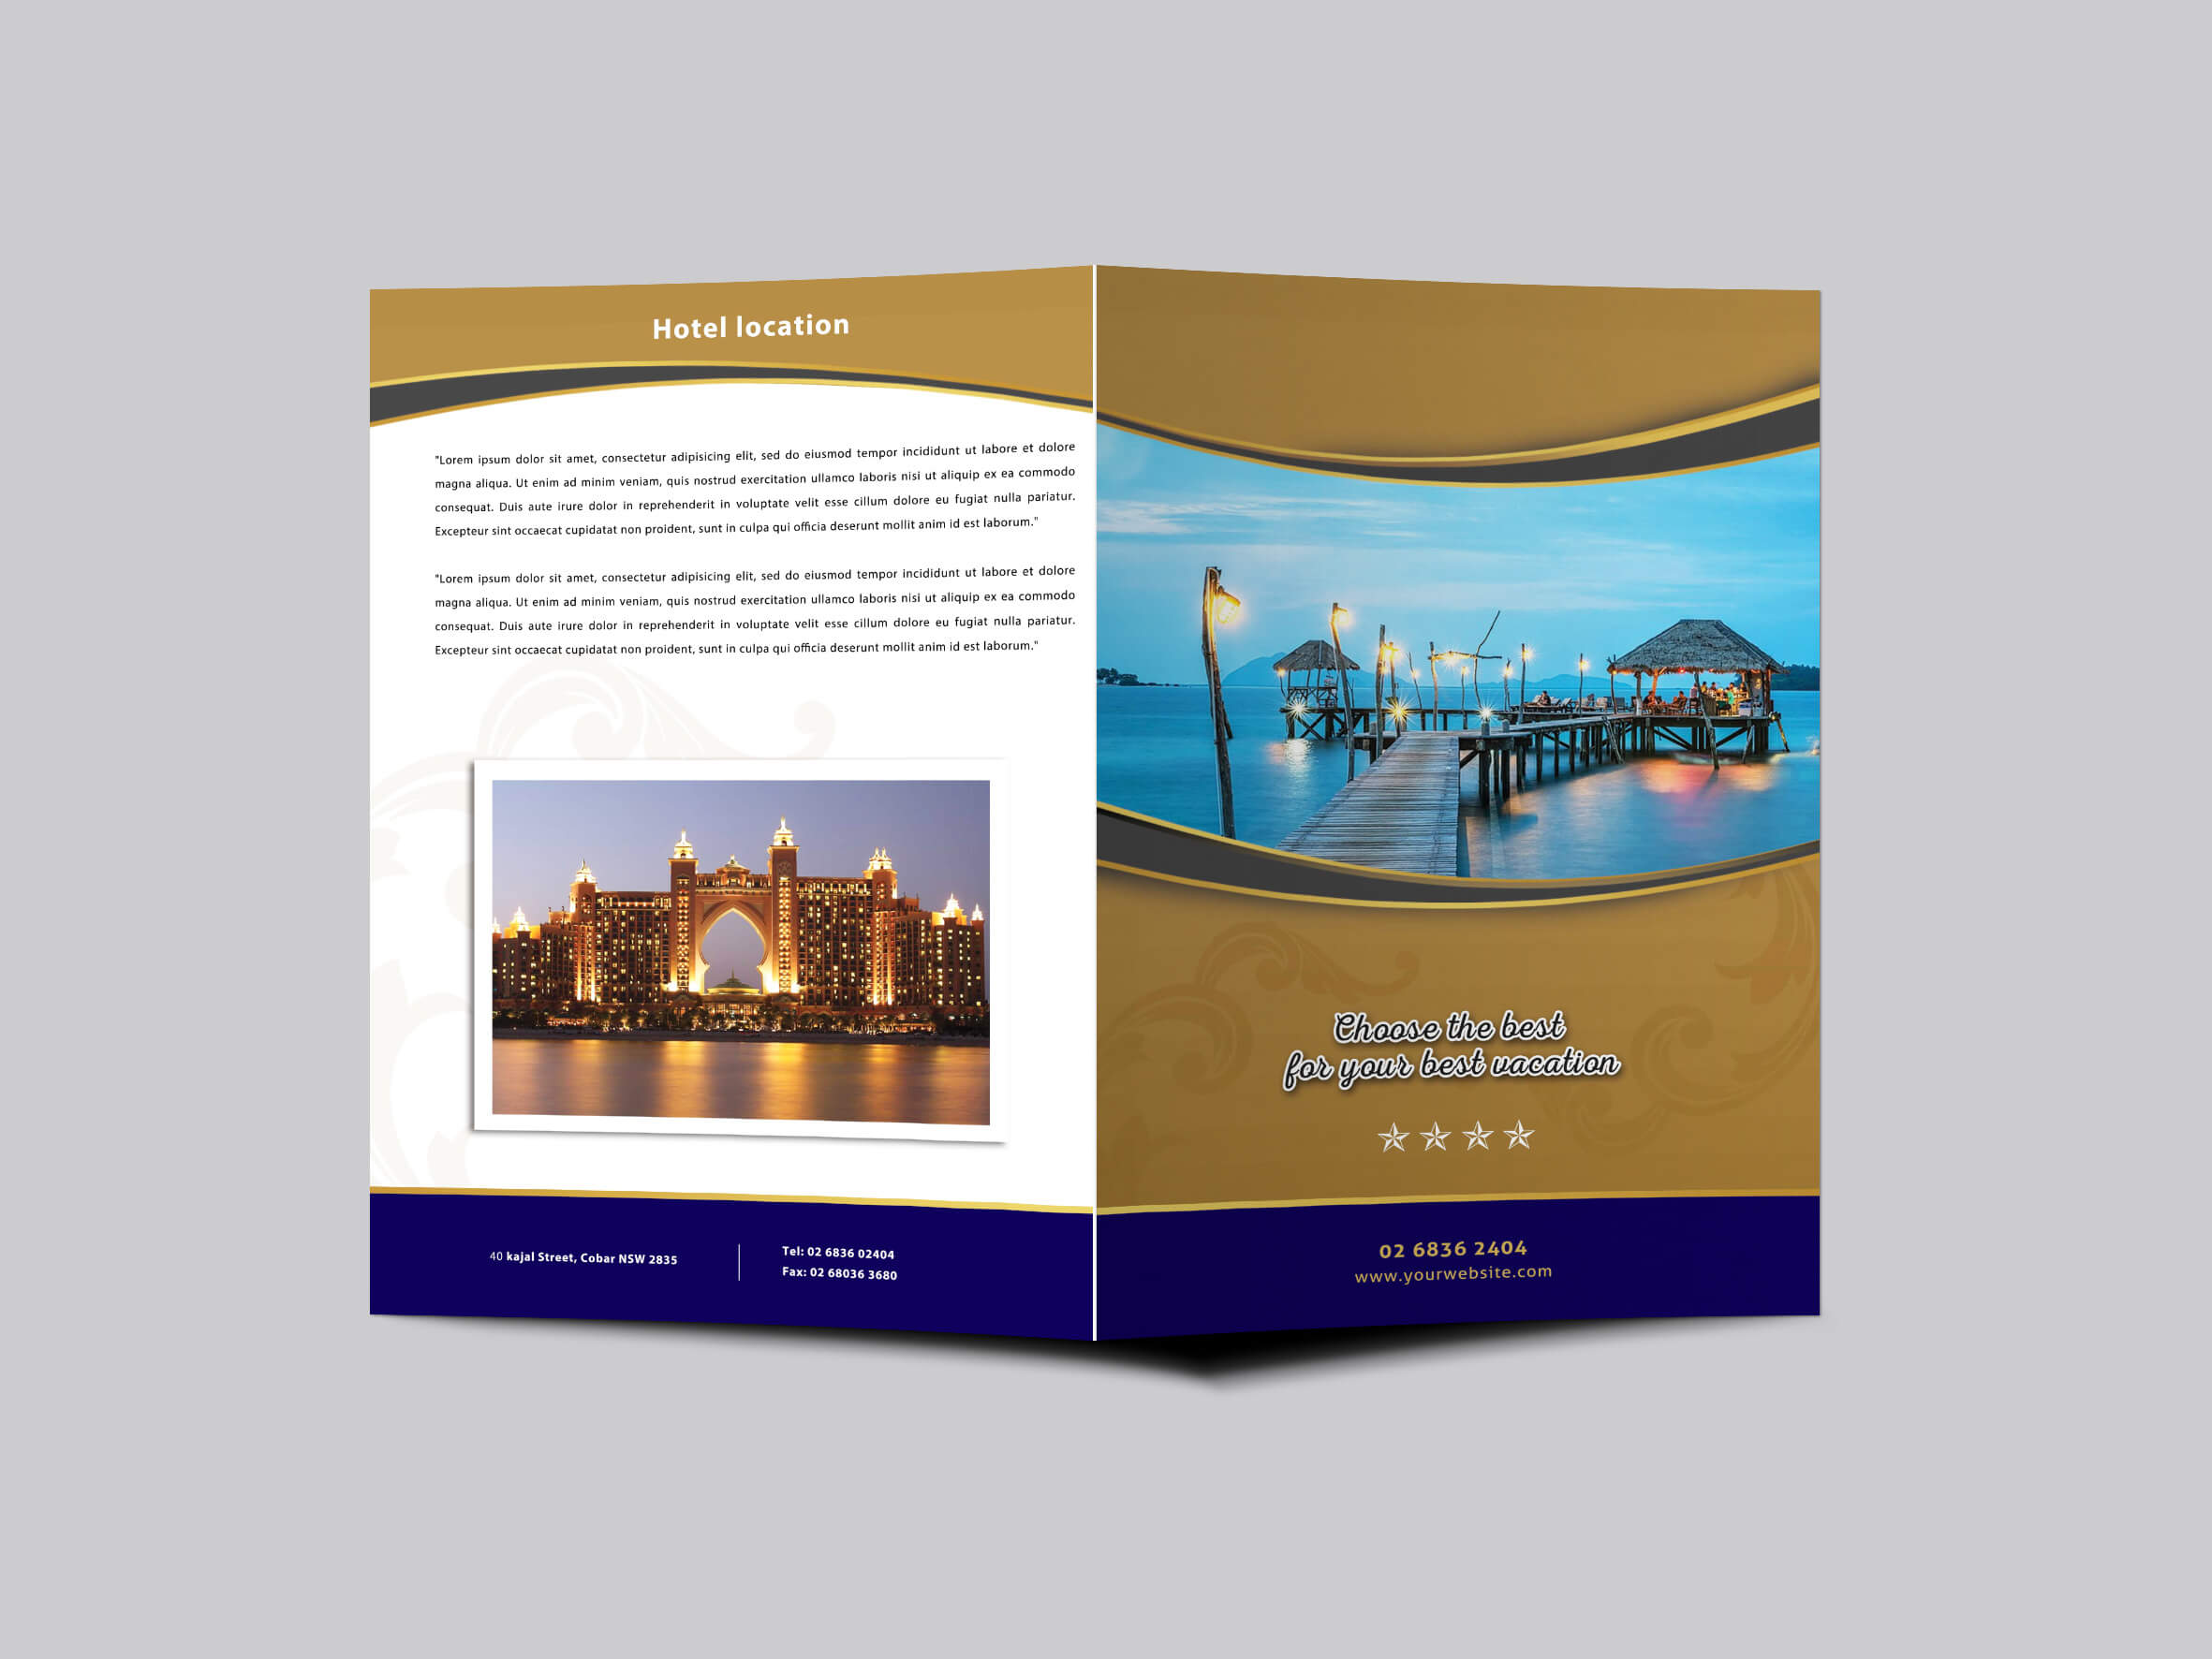 Hotel Resort Bi Fold Brochure Design Templatearun Kumar In Hotel Brochure Design Templates